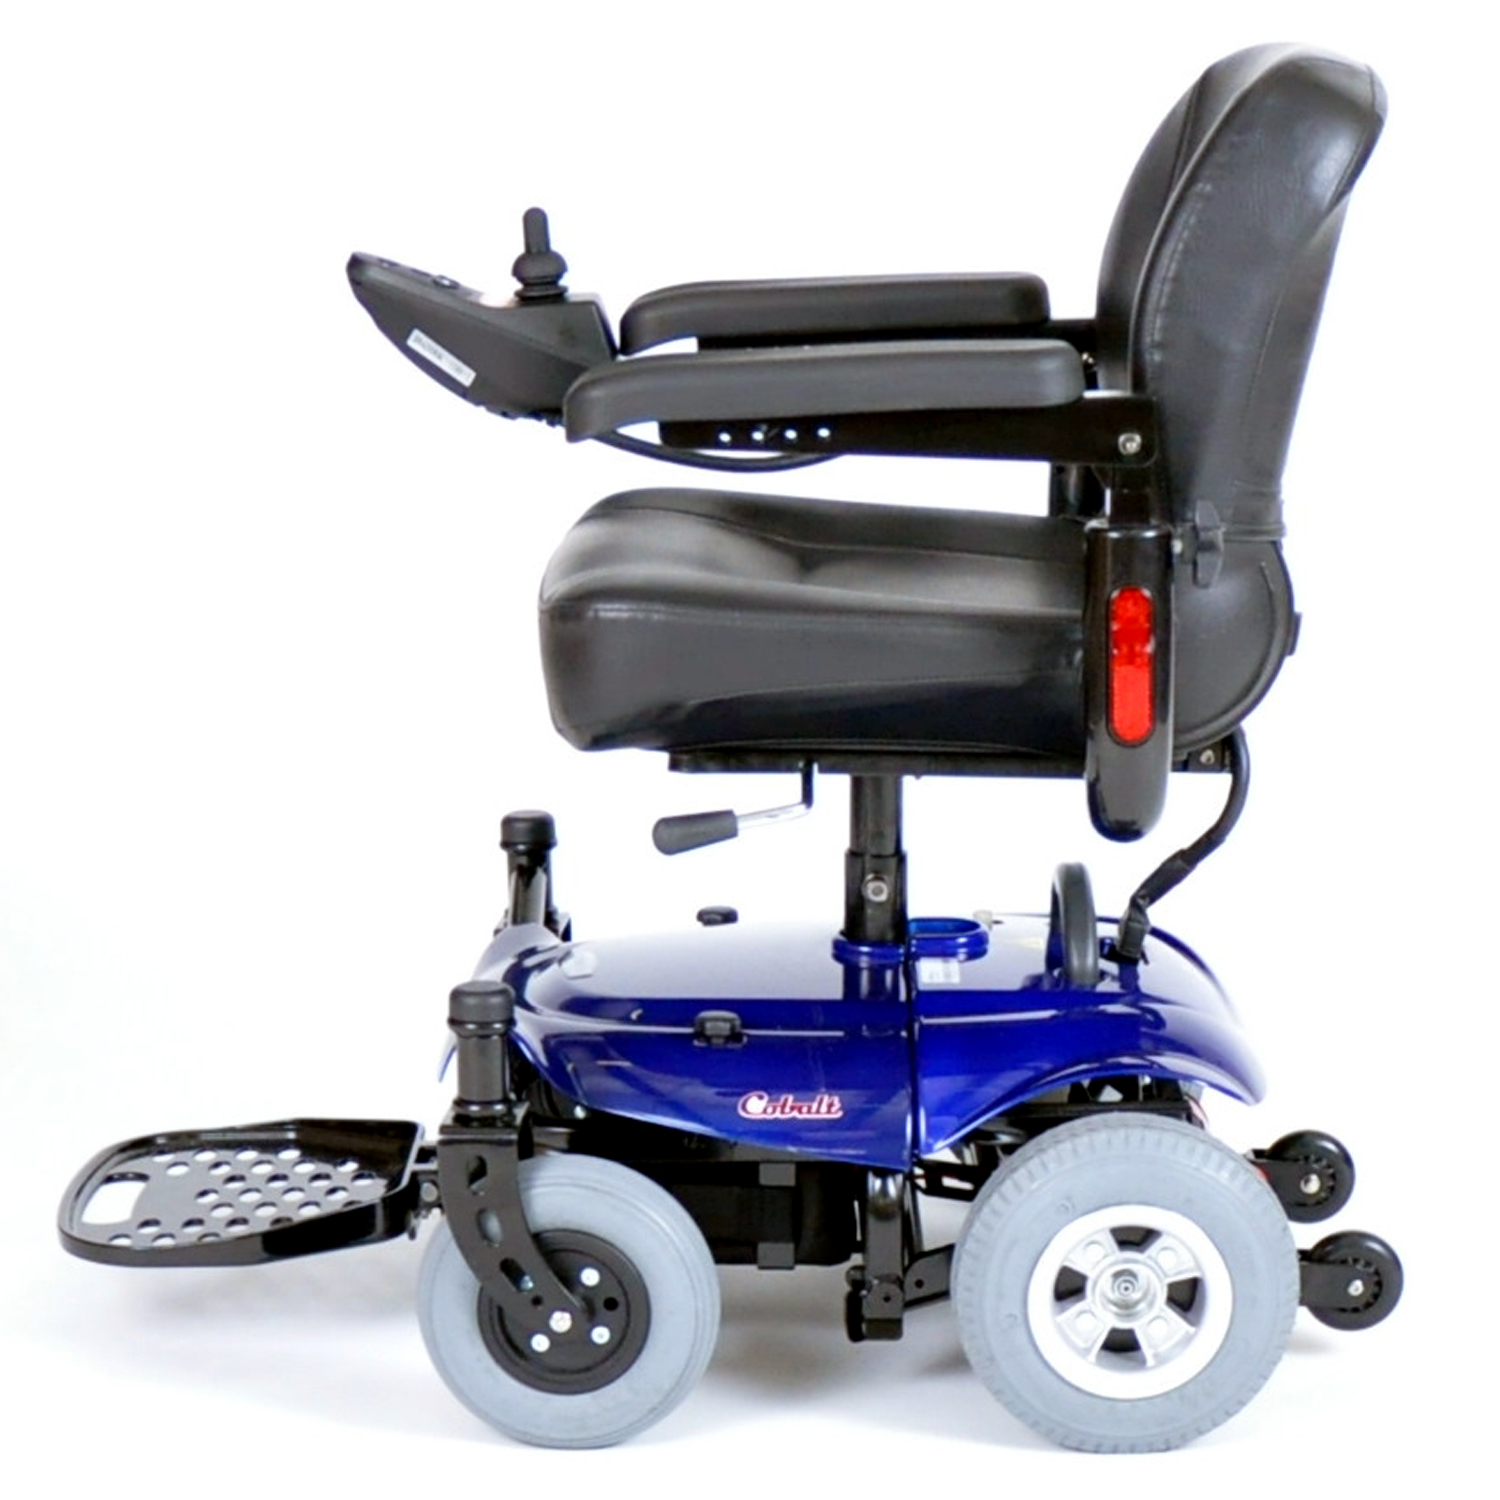 cobalt-x23-power-wheelchair-cobaltx23bl16fs-drive-medical-3.jpg